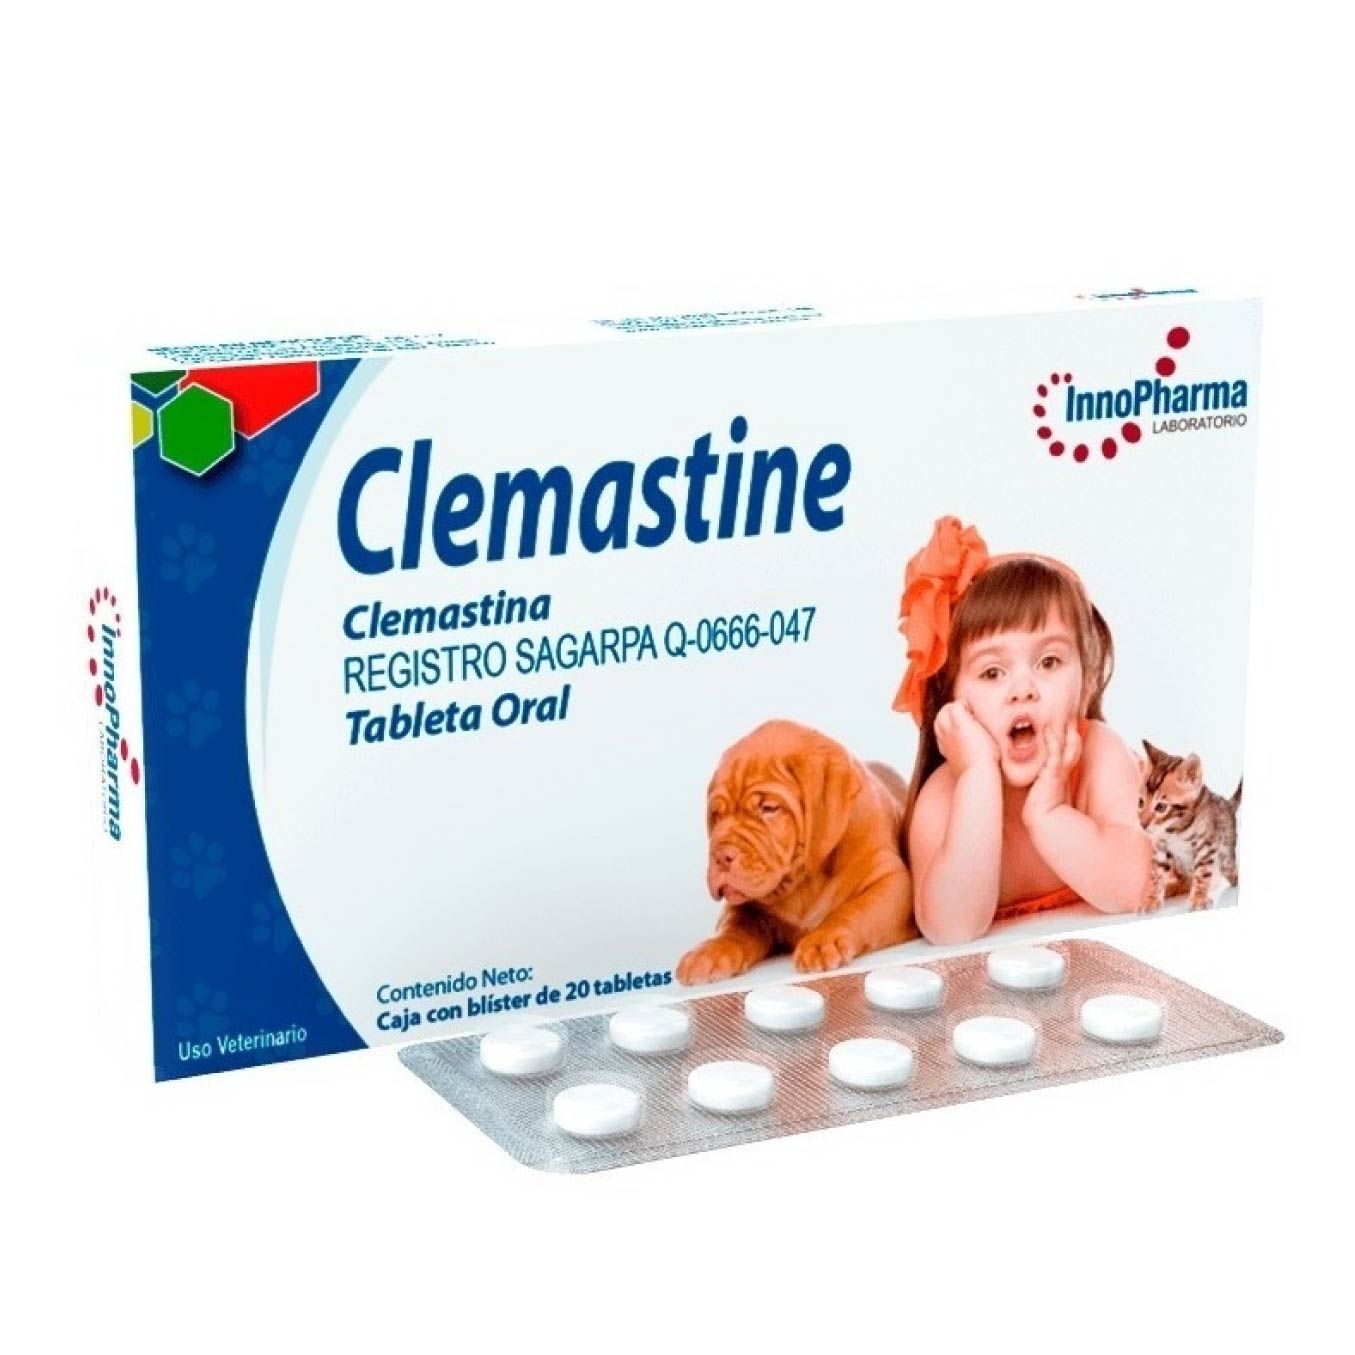 Clemastine - Clemastina Antihistamínico  Tableta Oral - InnoPharma, Farmacia, InnoPharma, Mister Mascotas